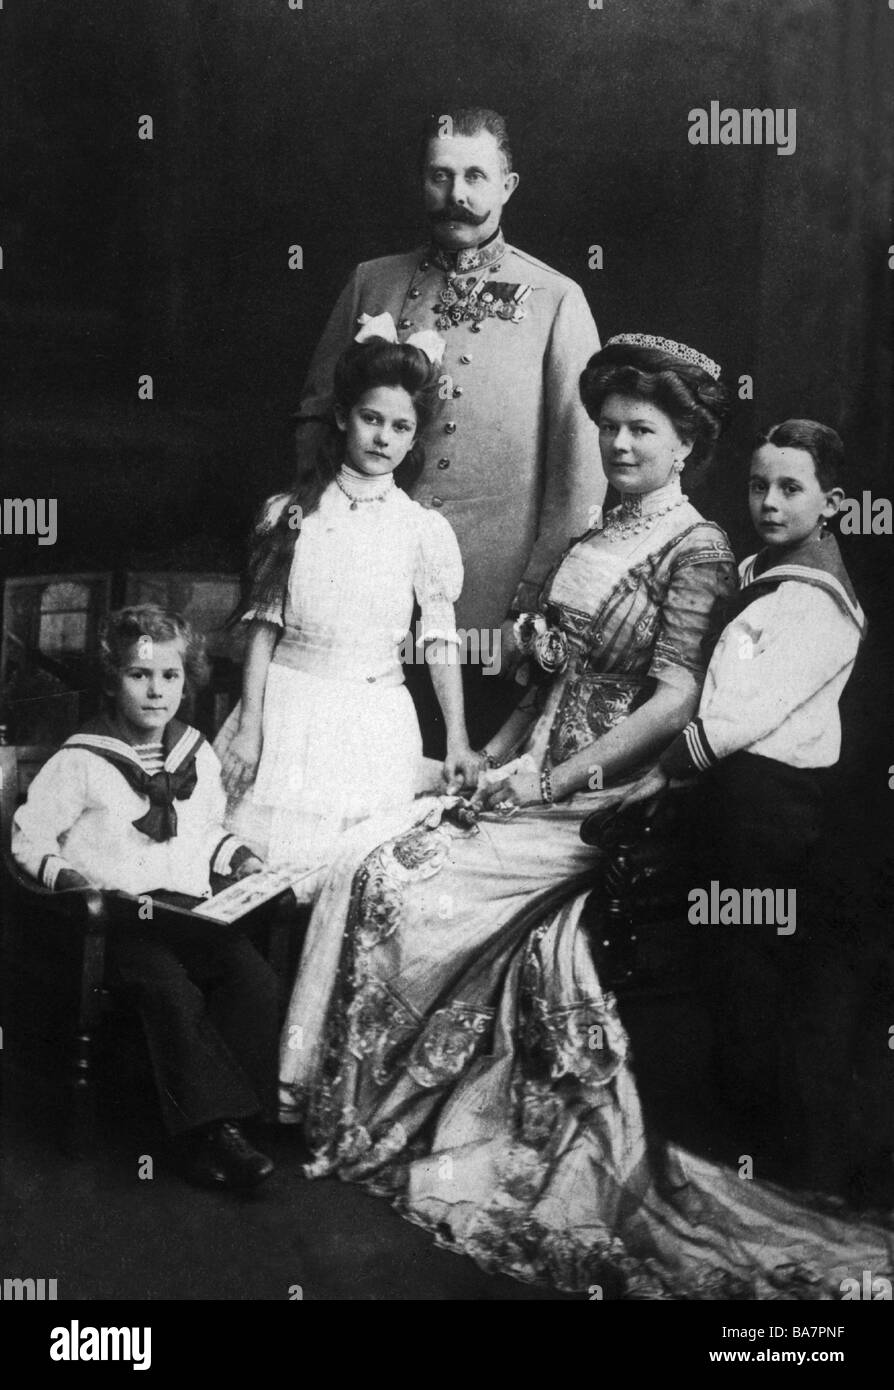 Francis Ferdinand, 18.12.1863 - 28.6.1914, Archduke, heir apparent of Austria-Hungary 30.1.1889  - 28.6.1914, half length, with family, photo postcard, circa 1913, Stock Photo